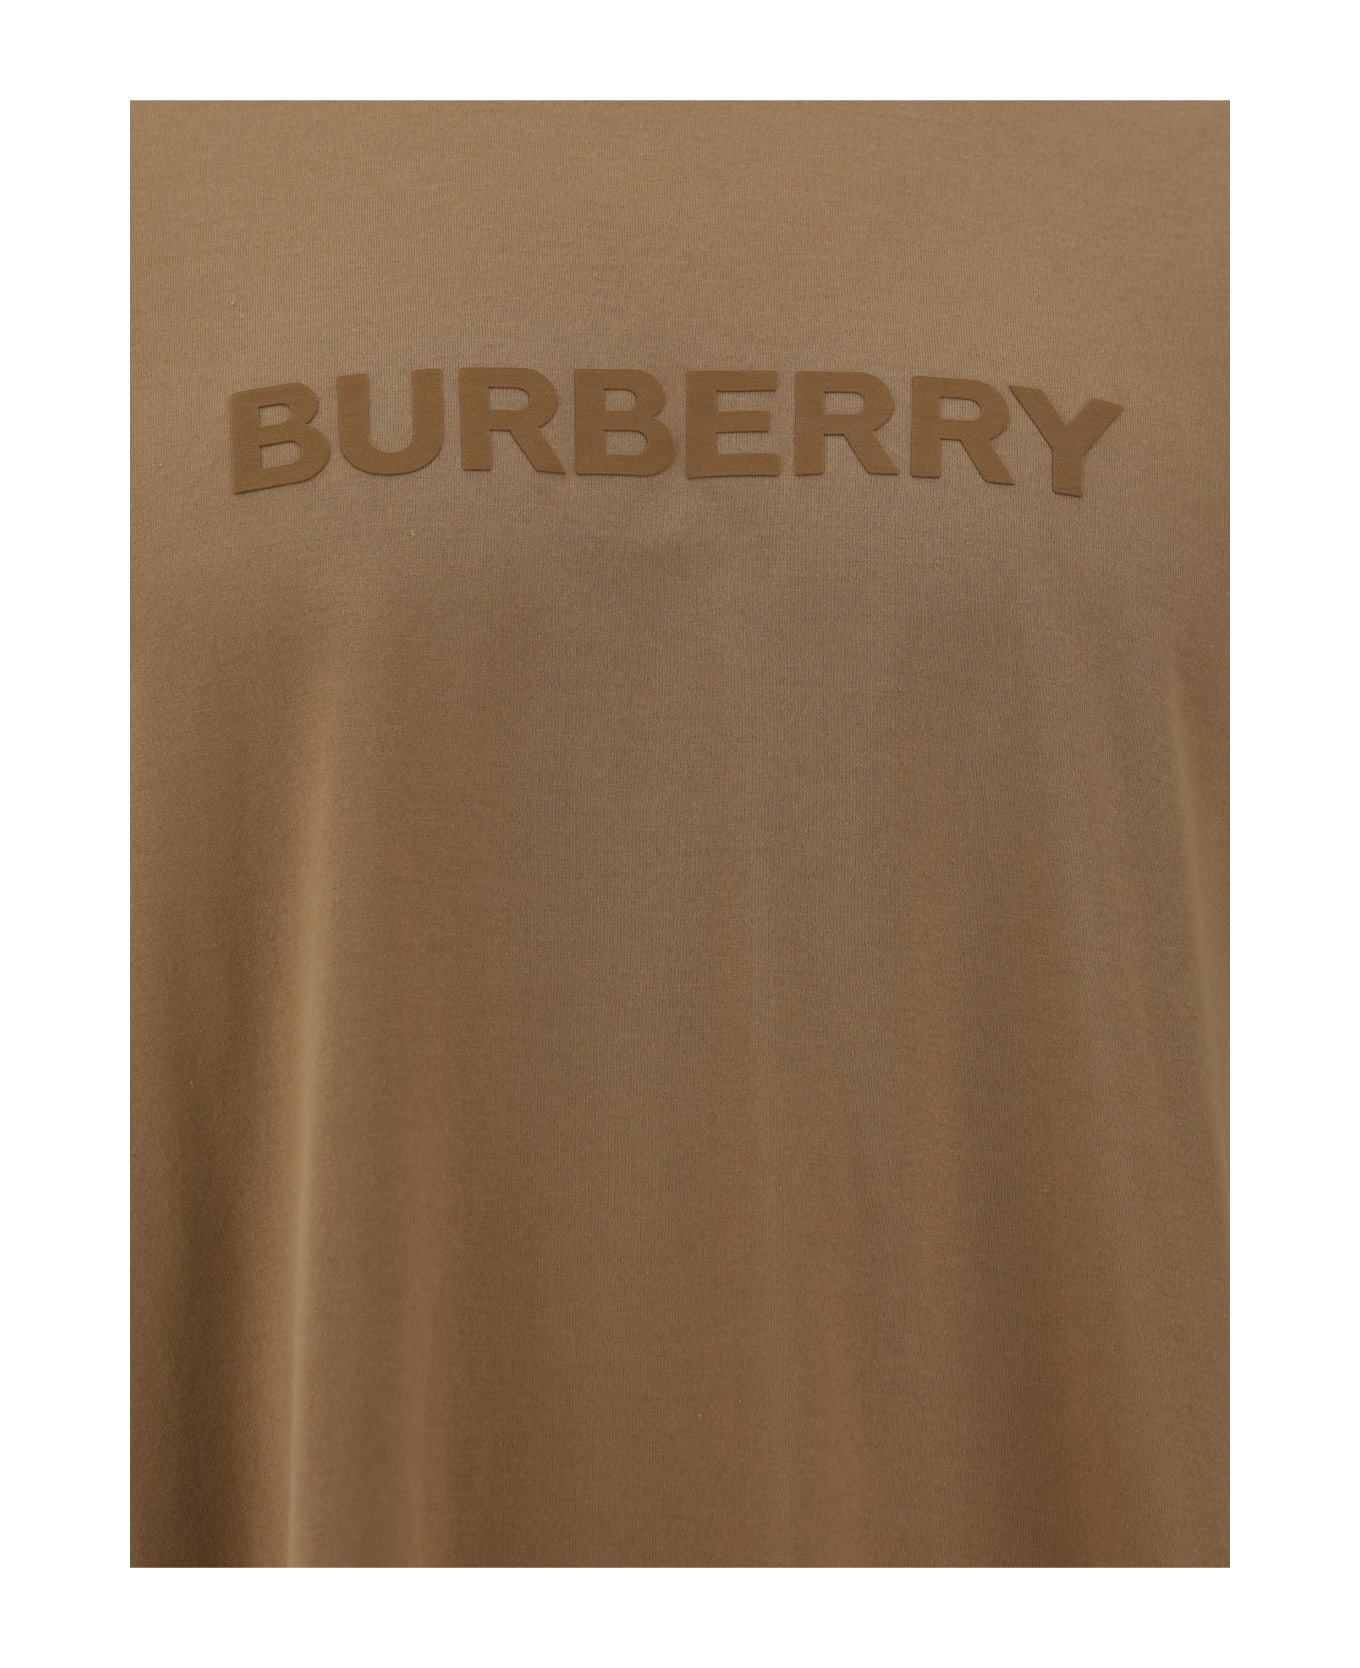 Burberry Harriston T-shirt - Brown